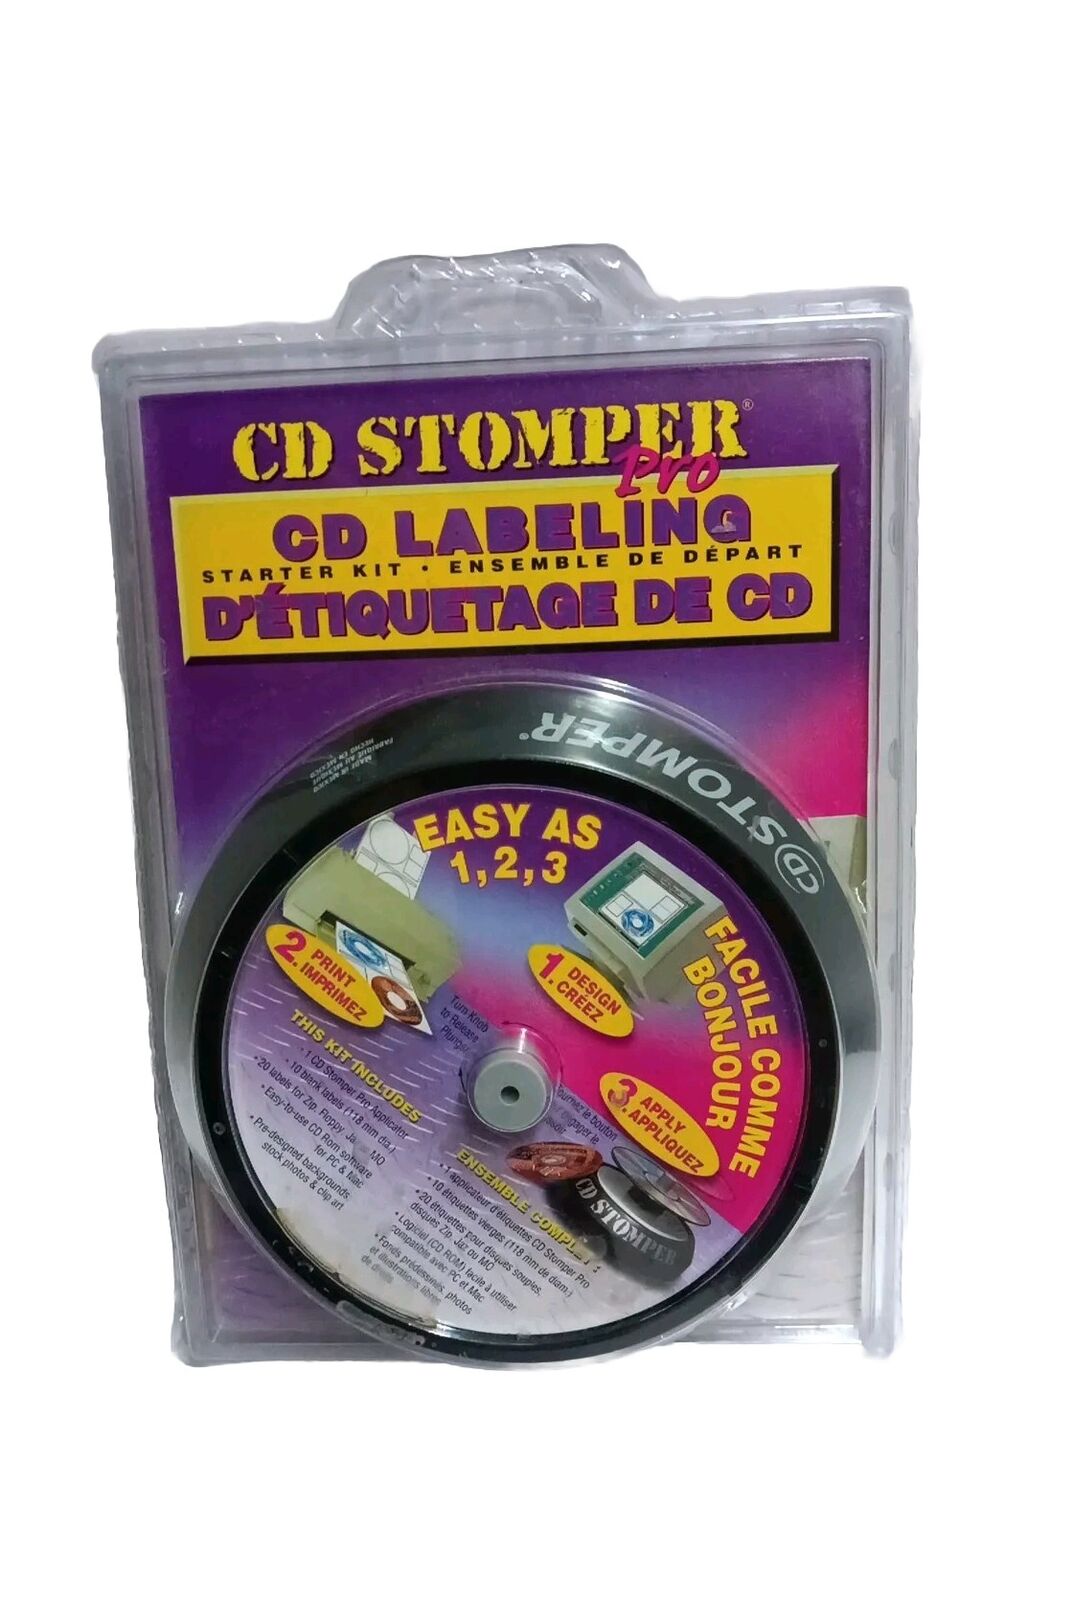 CD Stomper Pro Labeling System New Sealed Starter Kit Blank Labels 1999